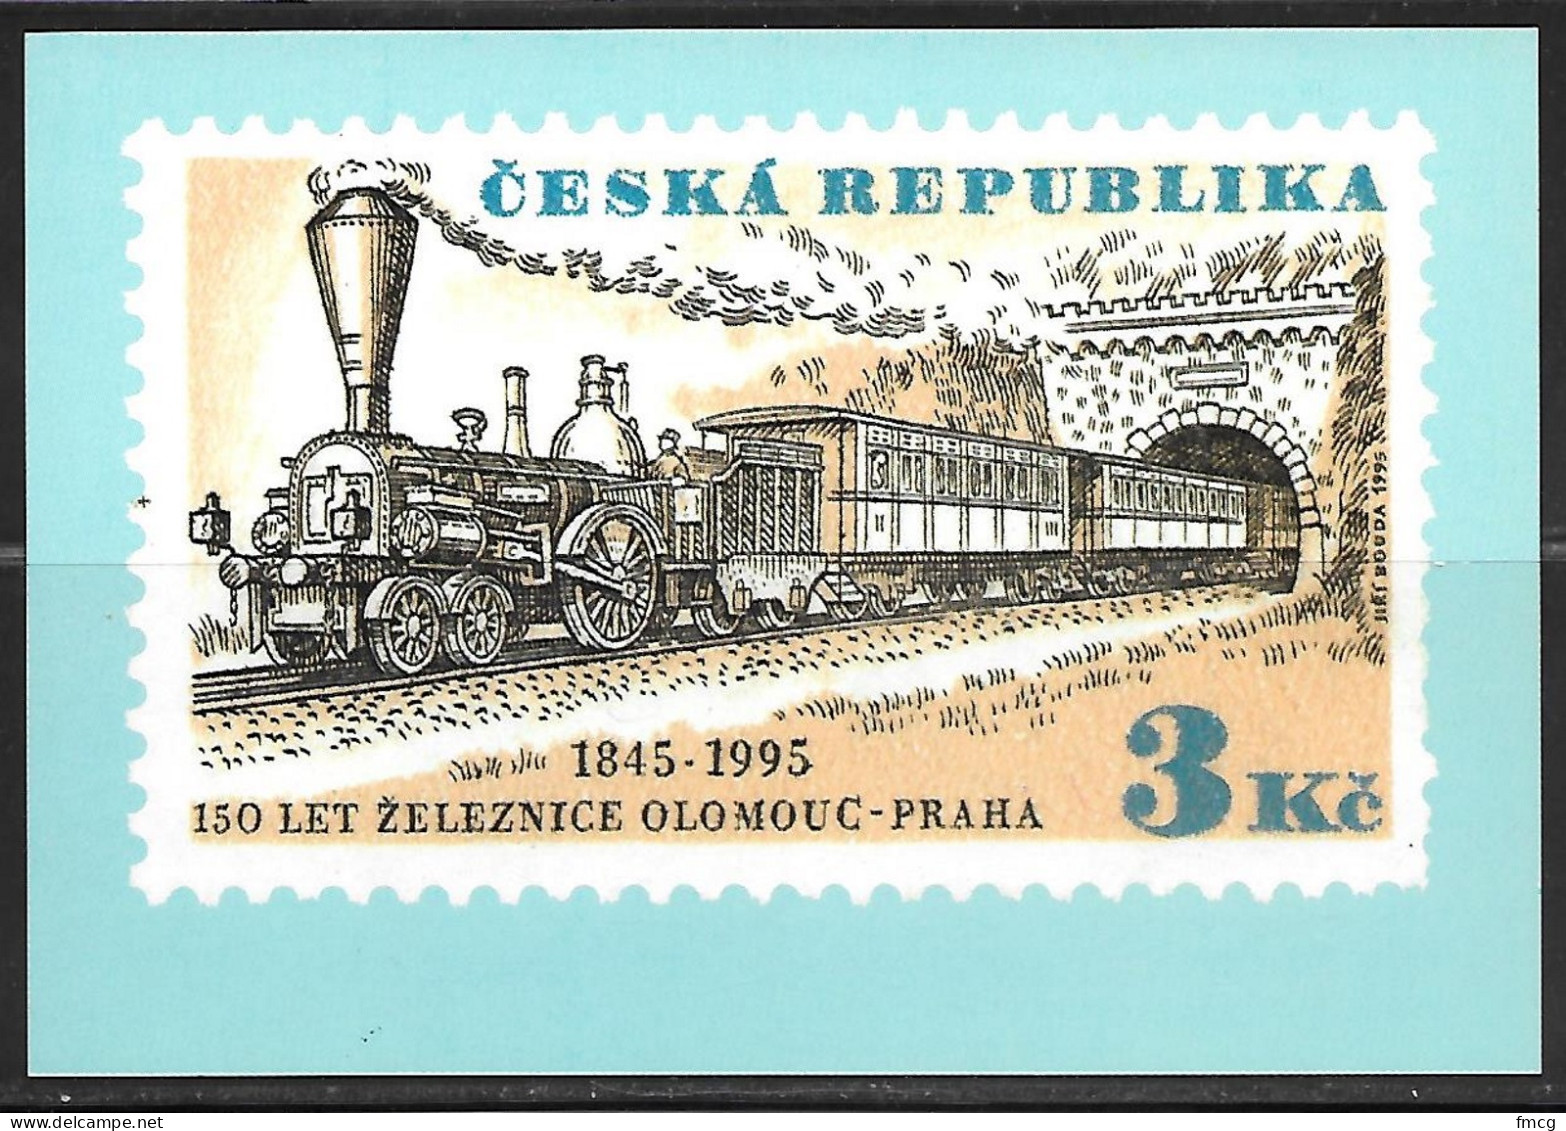 Czech Republic, 1995, Railroad Stamp, 3kc, Unused    - Czech Republic